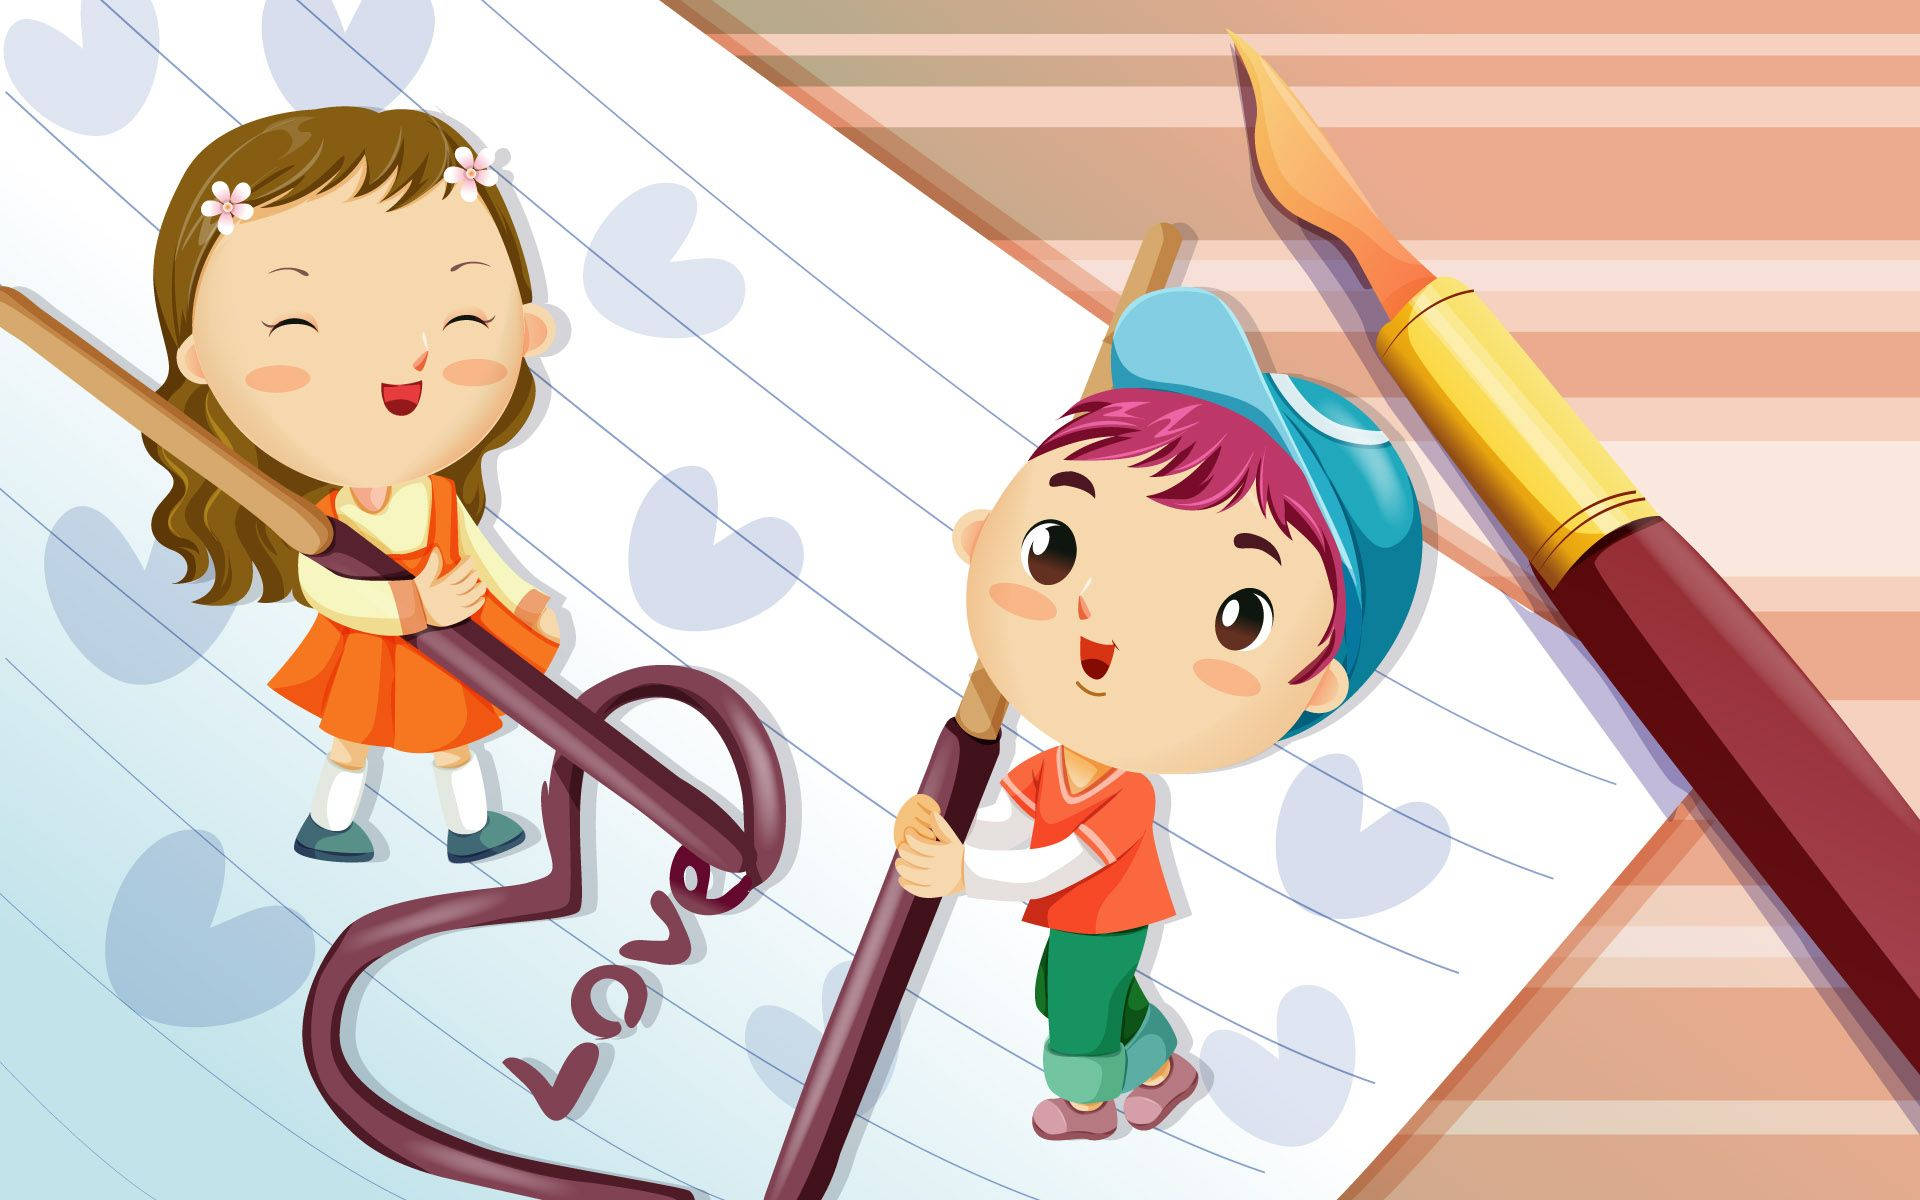 Free Cute Boy Cartoon Wallpaper Downloads, [100+] Cute Boy Cartoon  Wallpapers for FREE 